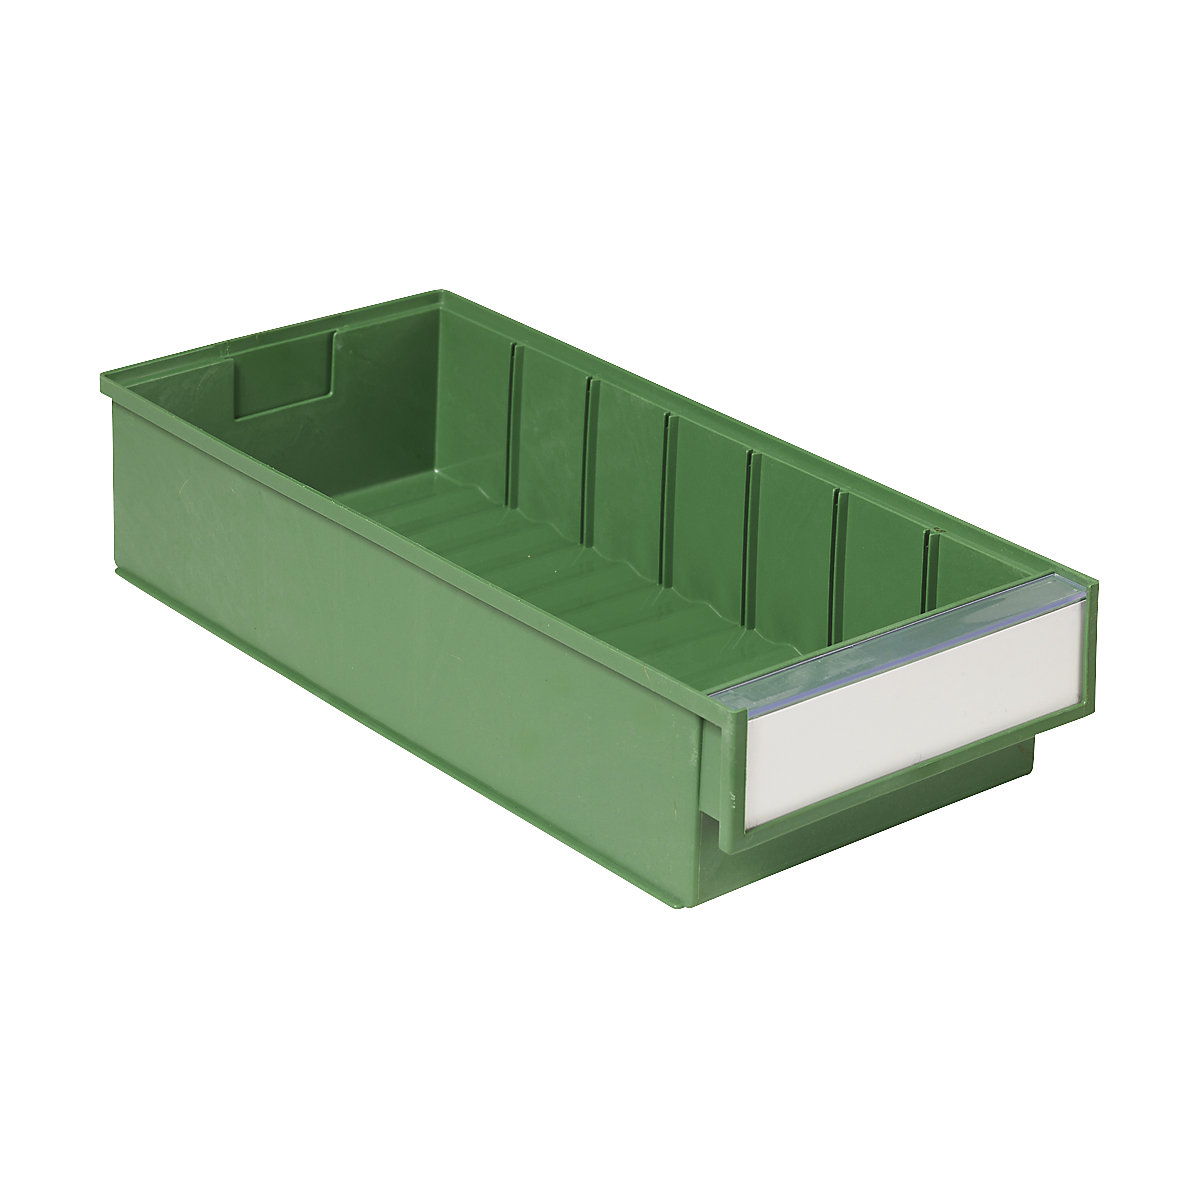 BiOX állványdoboz – Treston, zöld, h x szé x ma 400 x 186 x 82 mm, cs. e. 15 db-5